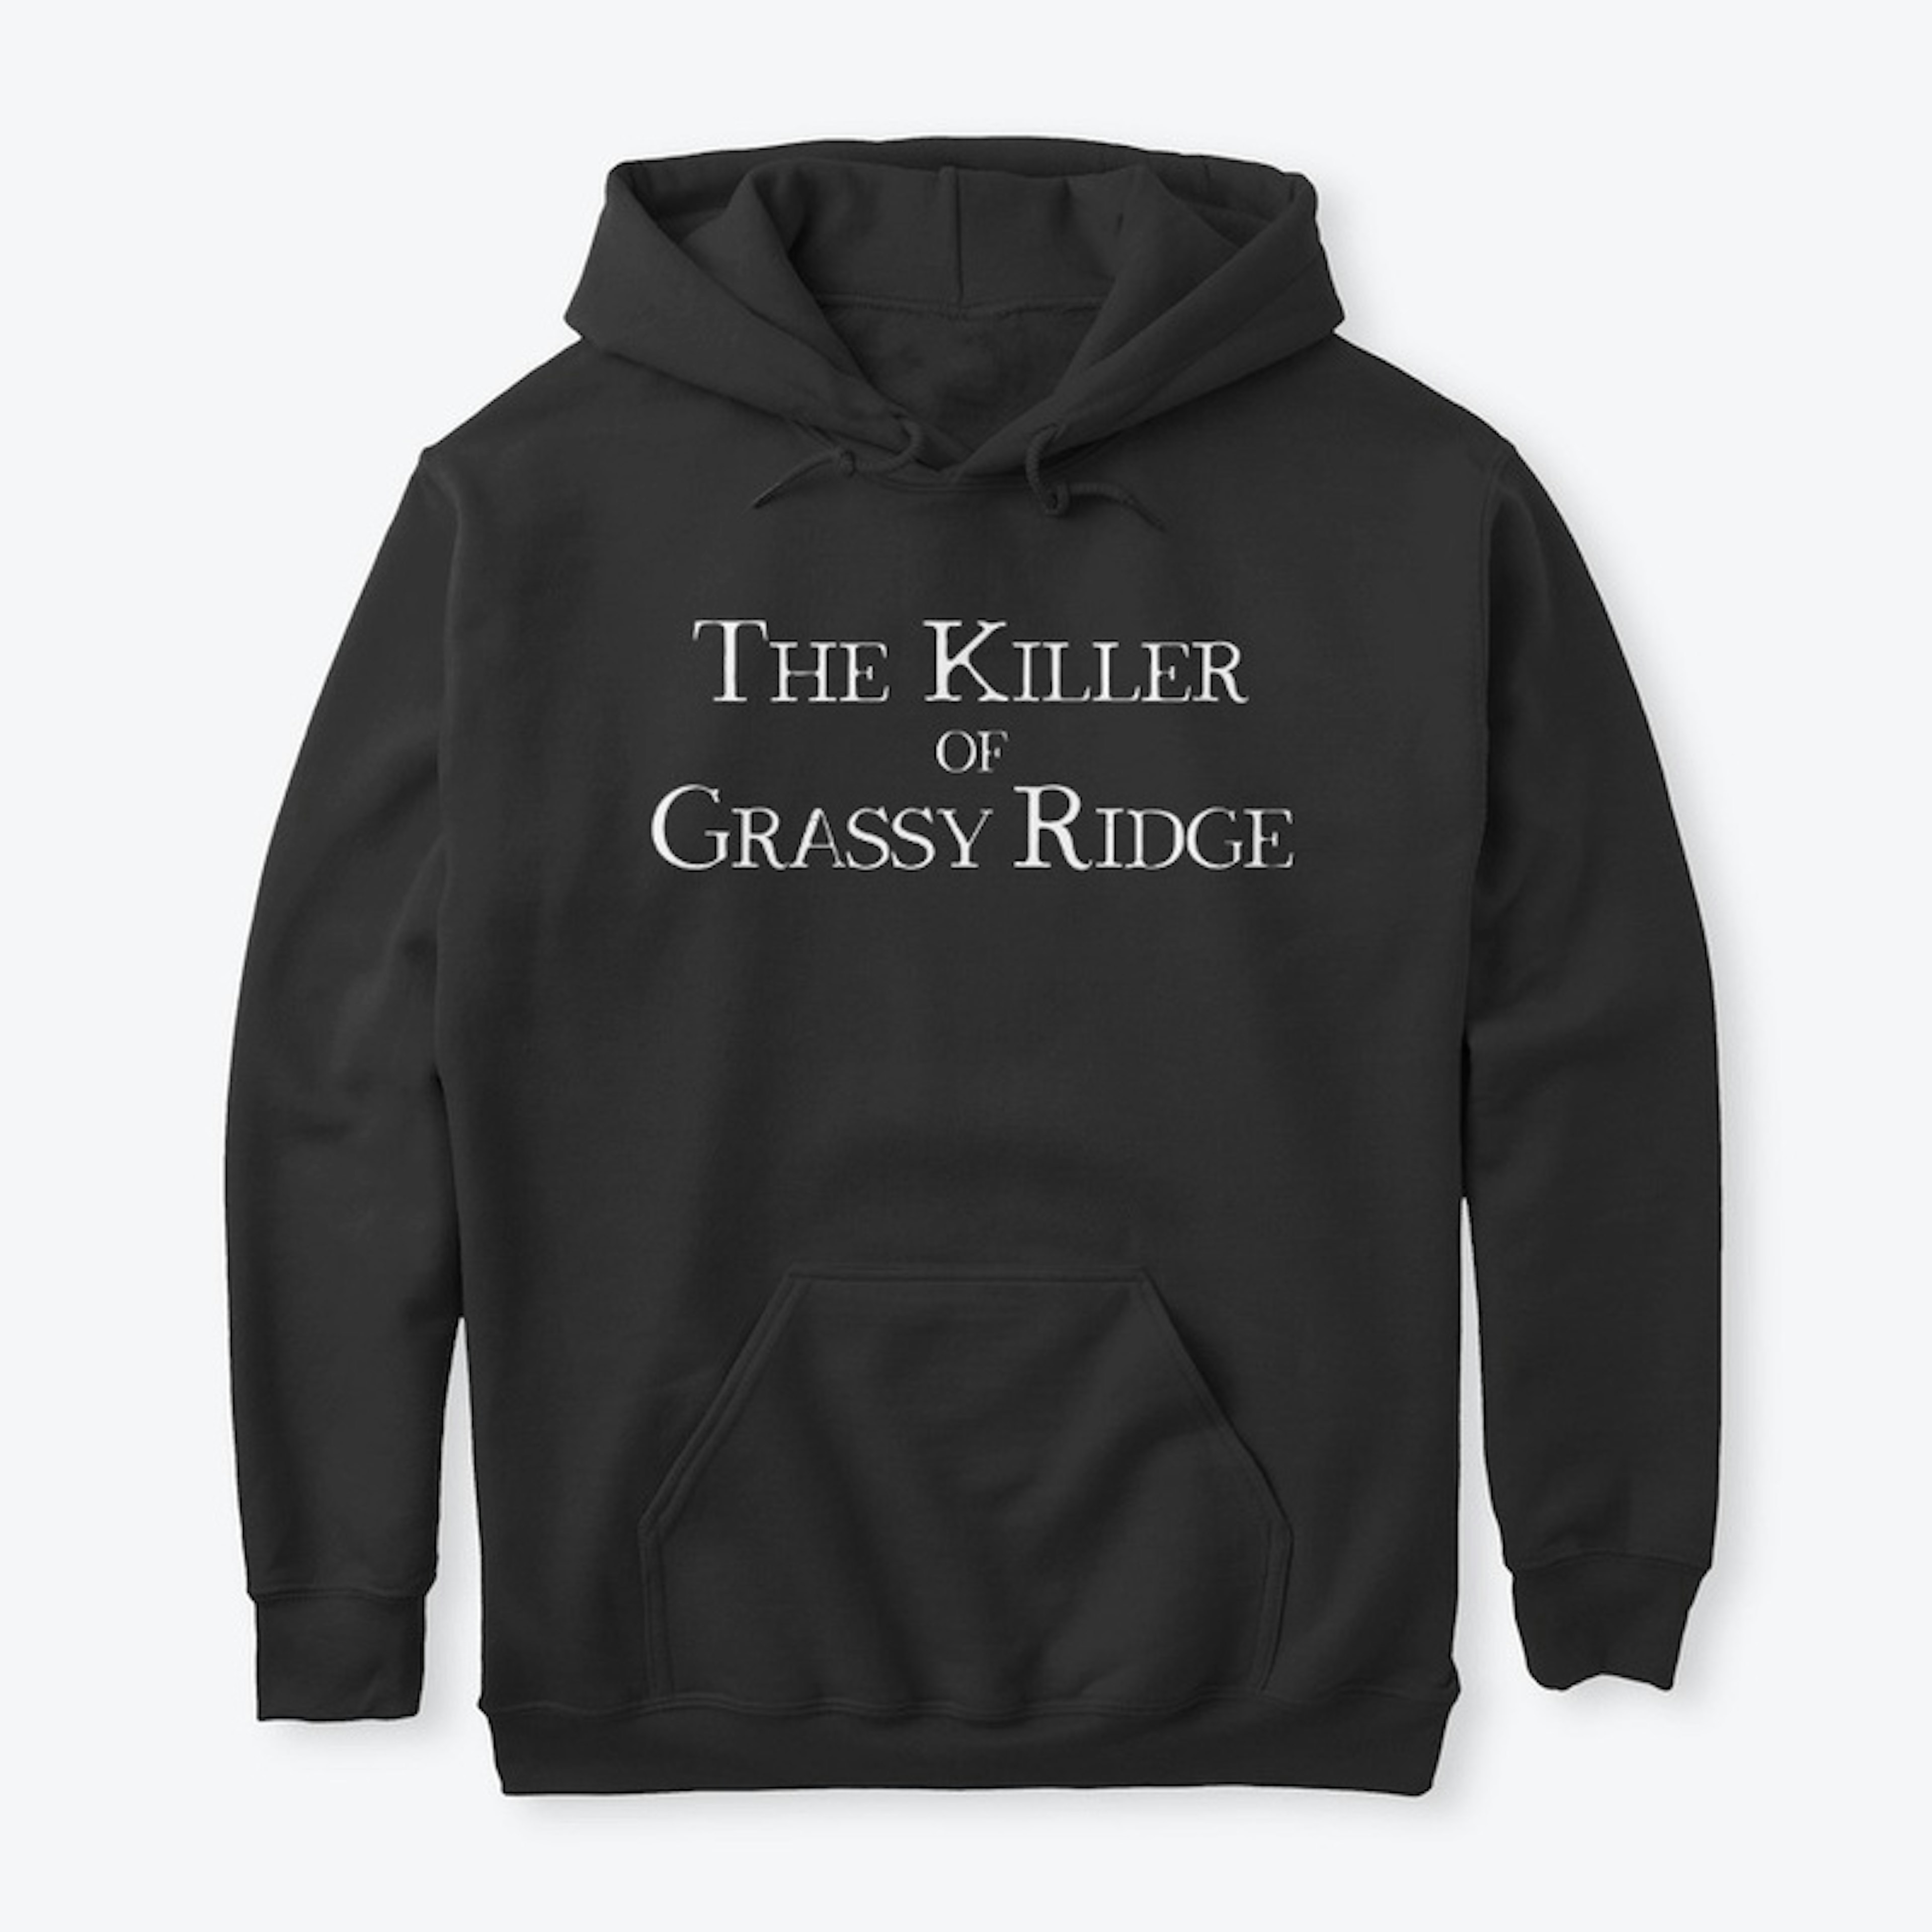 The Killer of Grassy Ridge